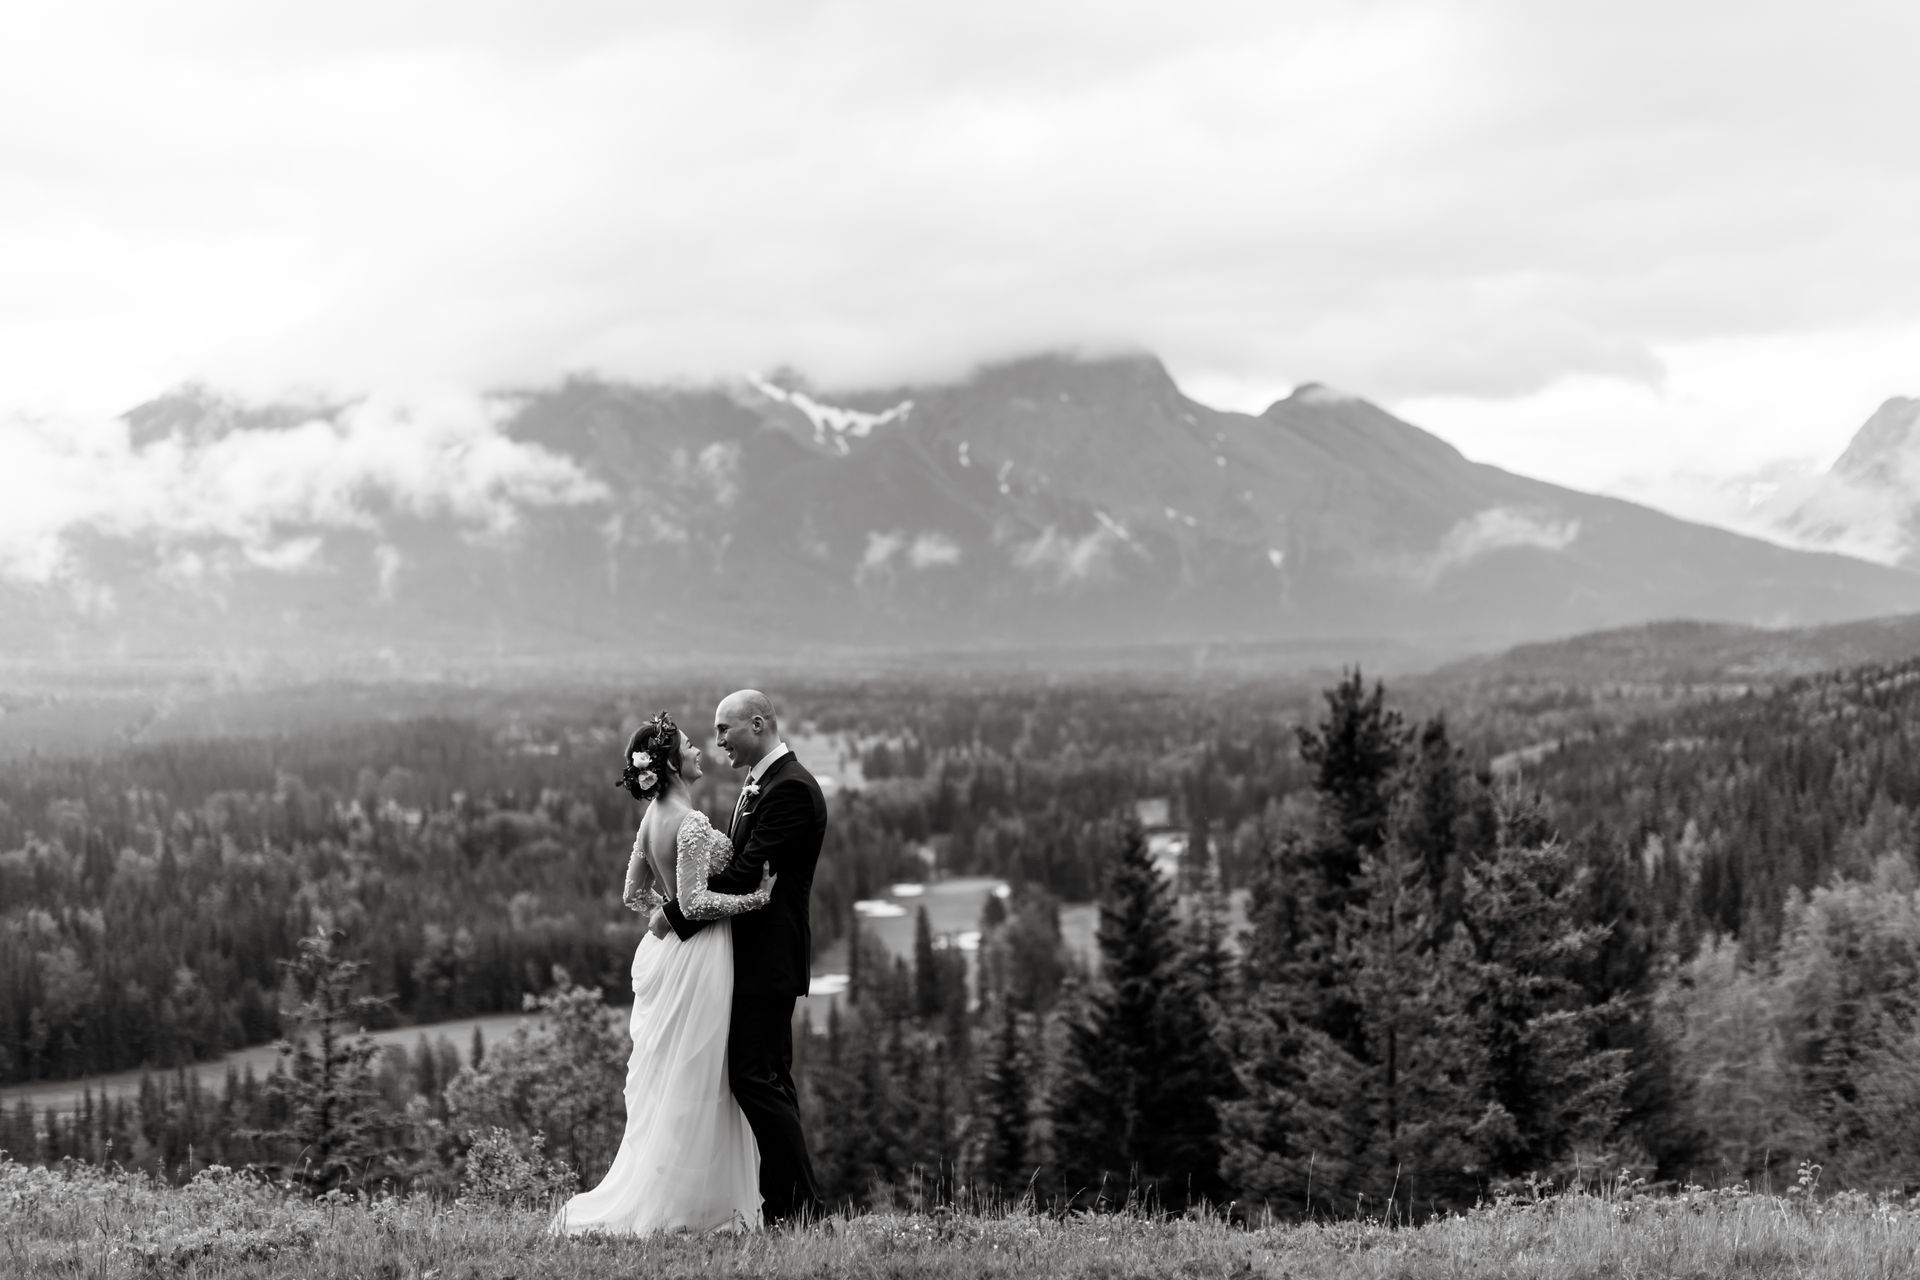 Unique Ideas to Make Your Alberta Mountain Wedding Truly Memorable